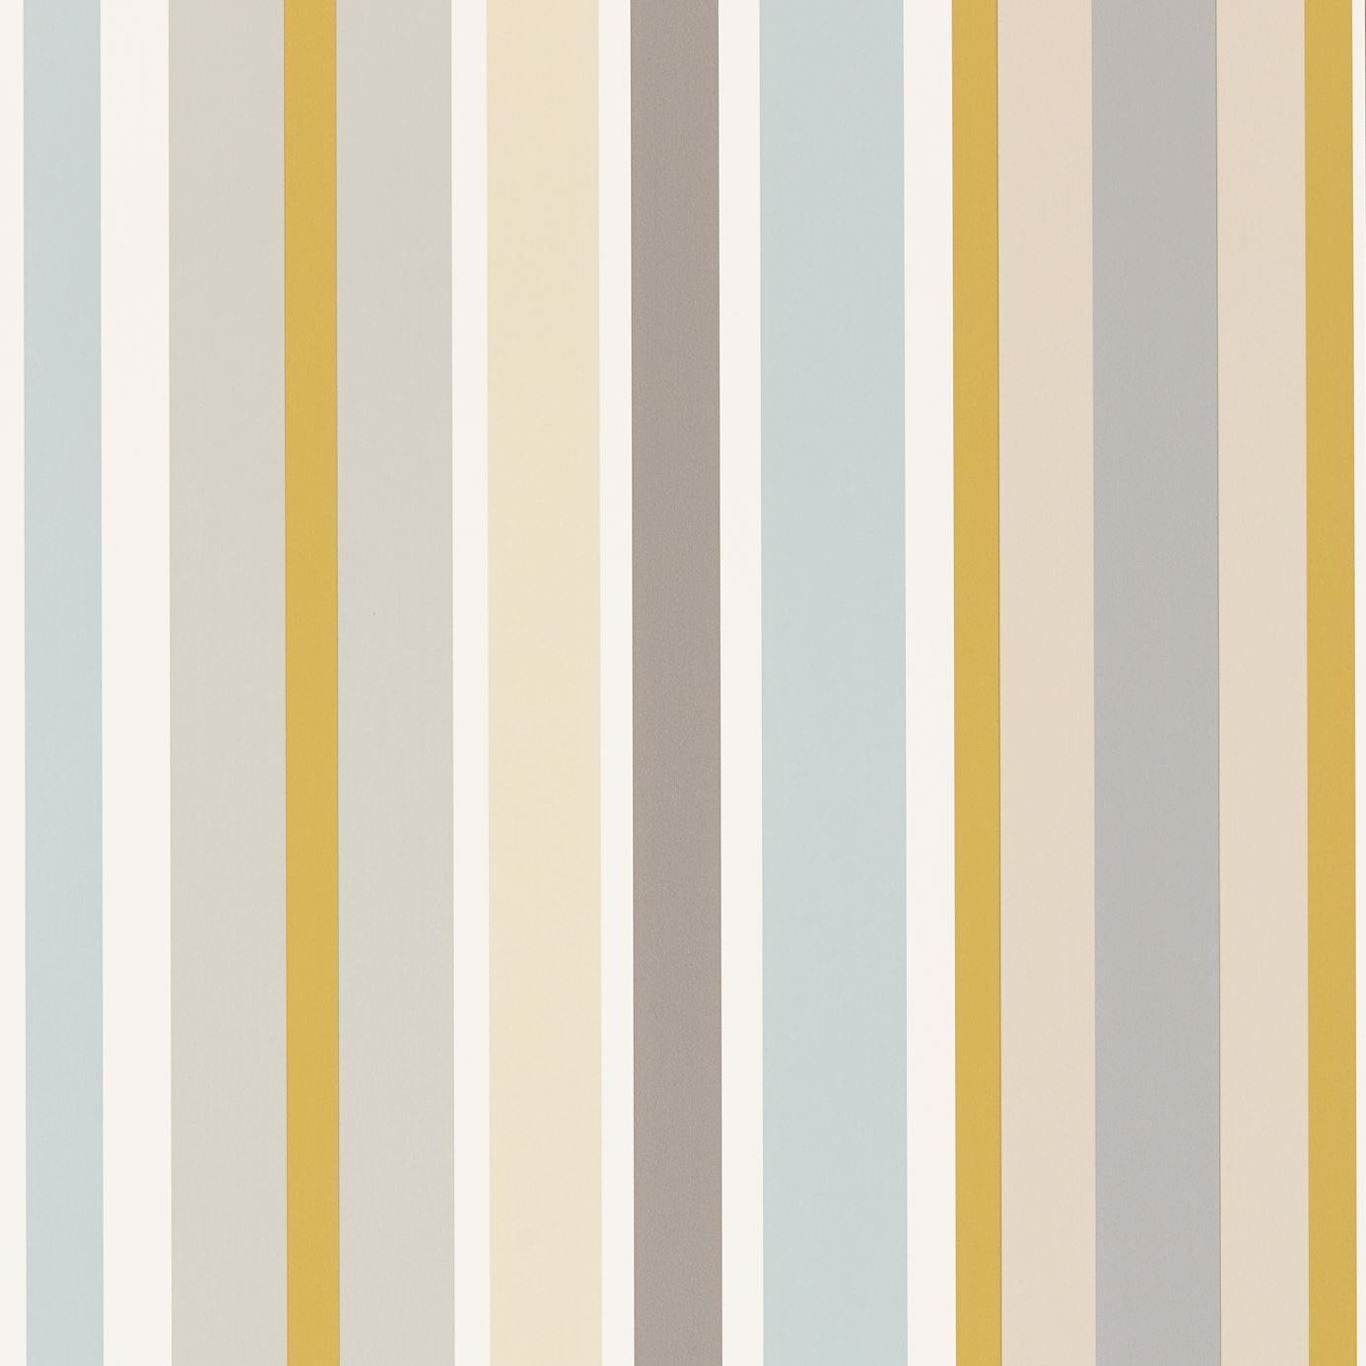 Jelly Tot Stripe Wallpaper by Scion